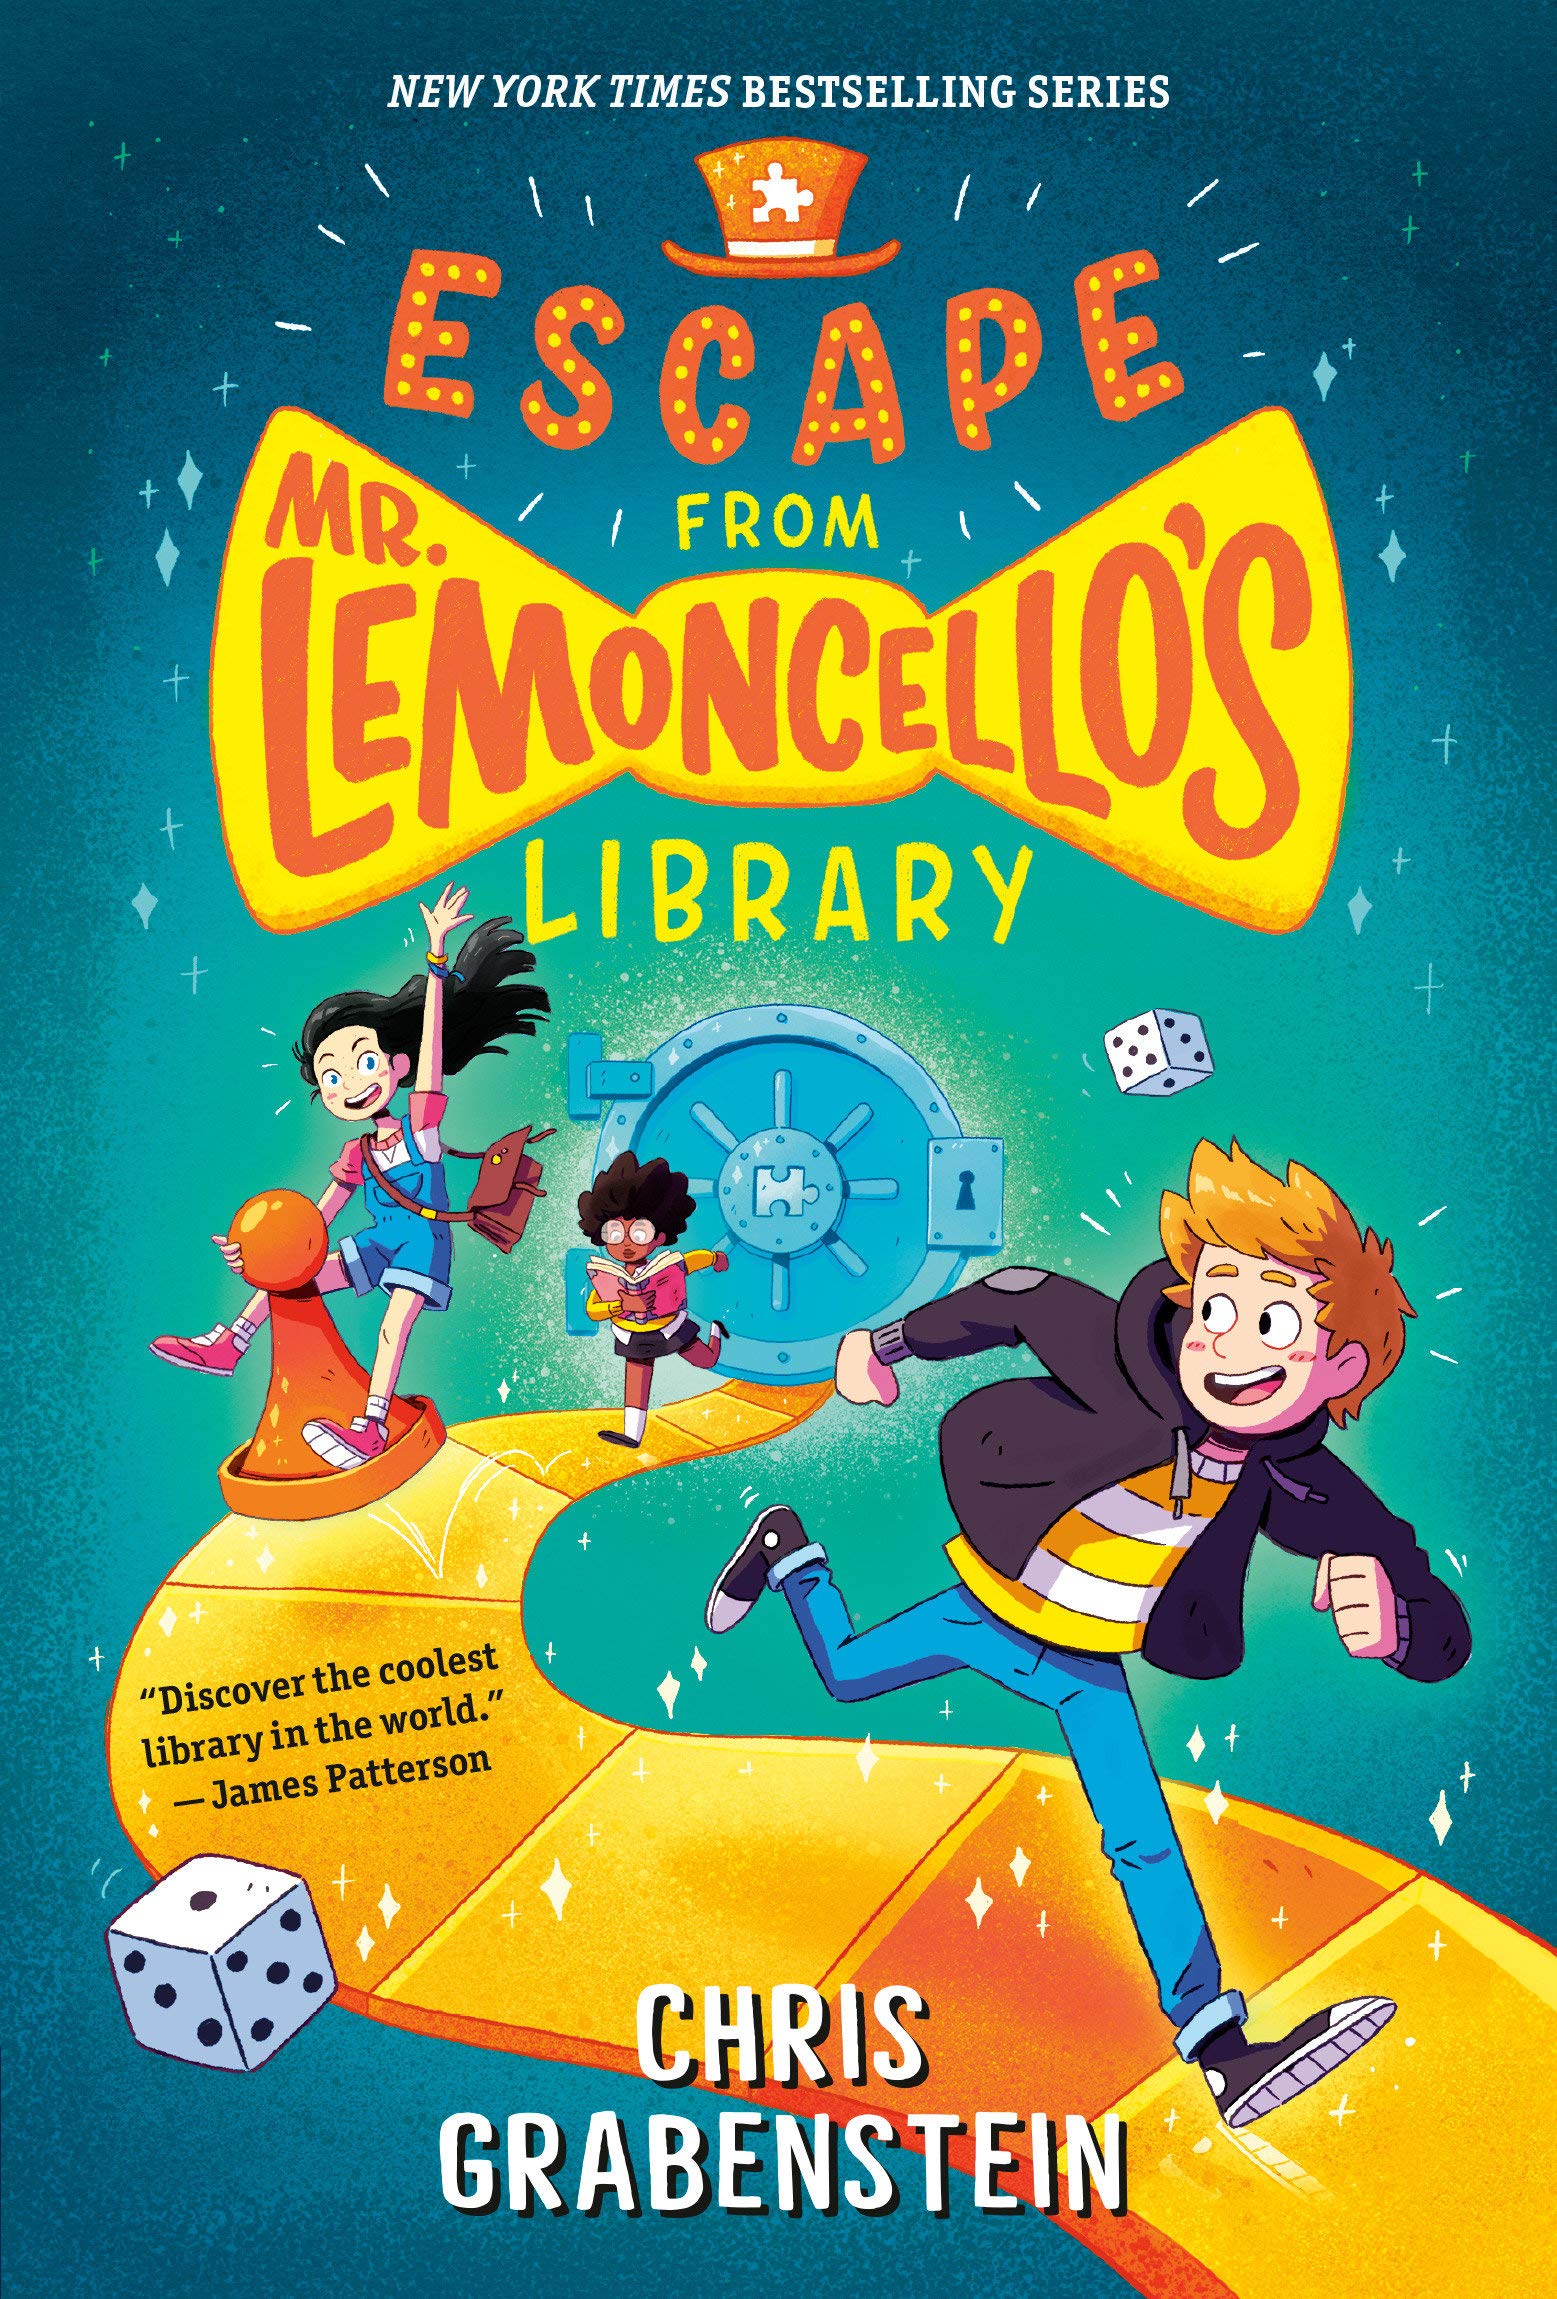 Escape From Mr. Lemoncello's Library Book Cover.